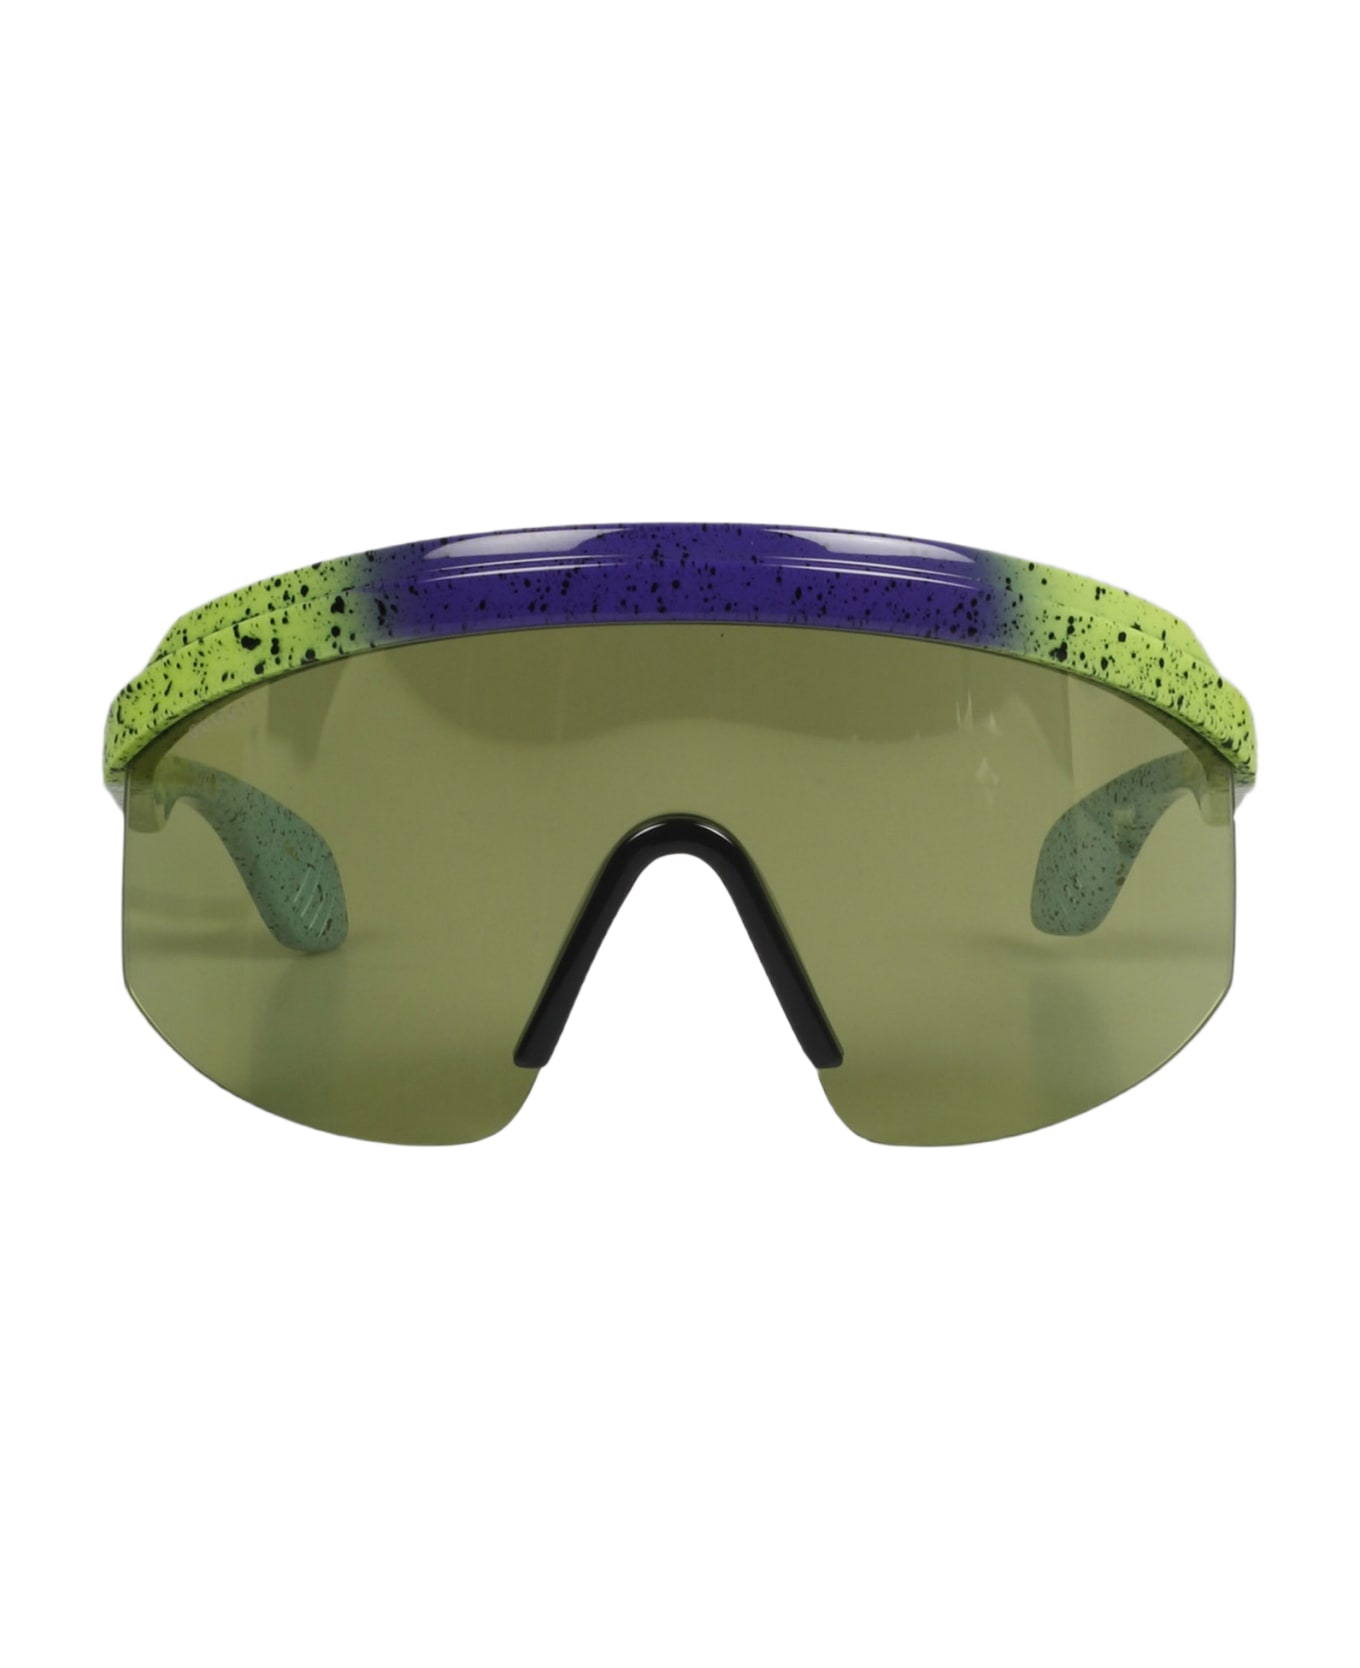 Gucci Eyewear Mask Frame Sunglasses - Green